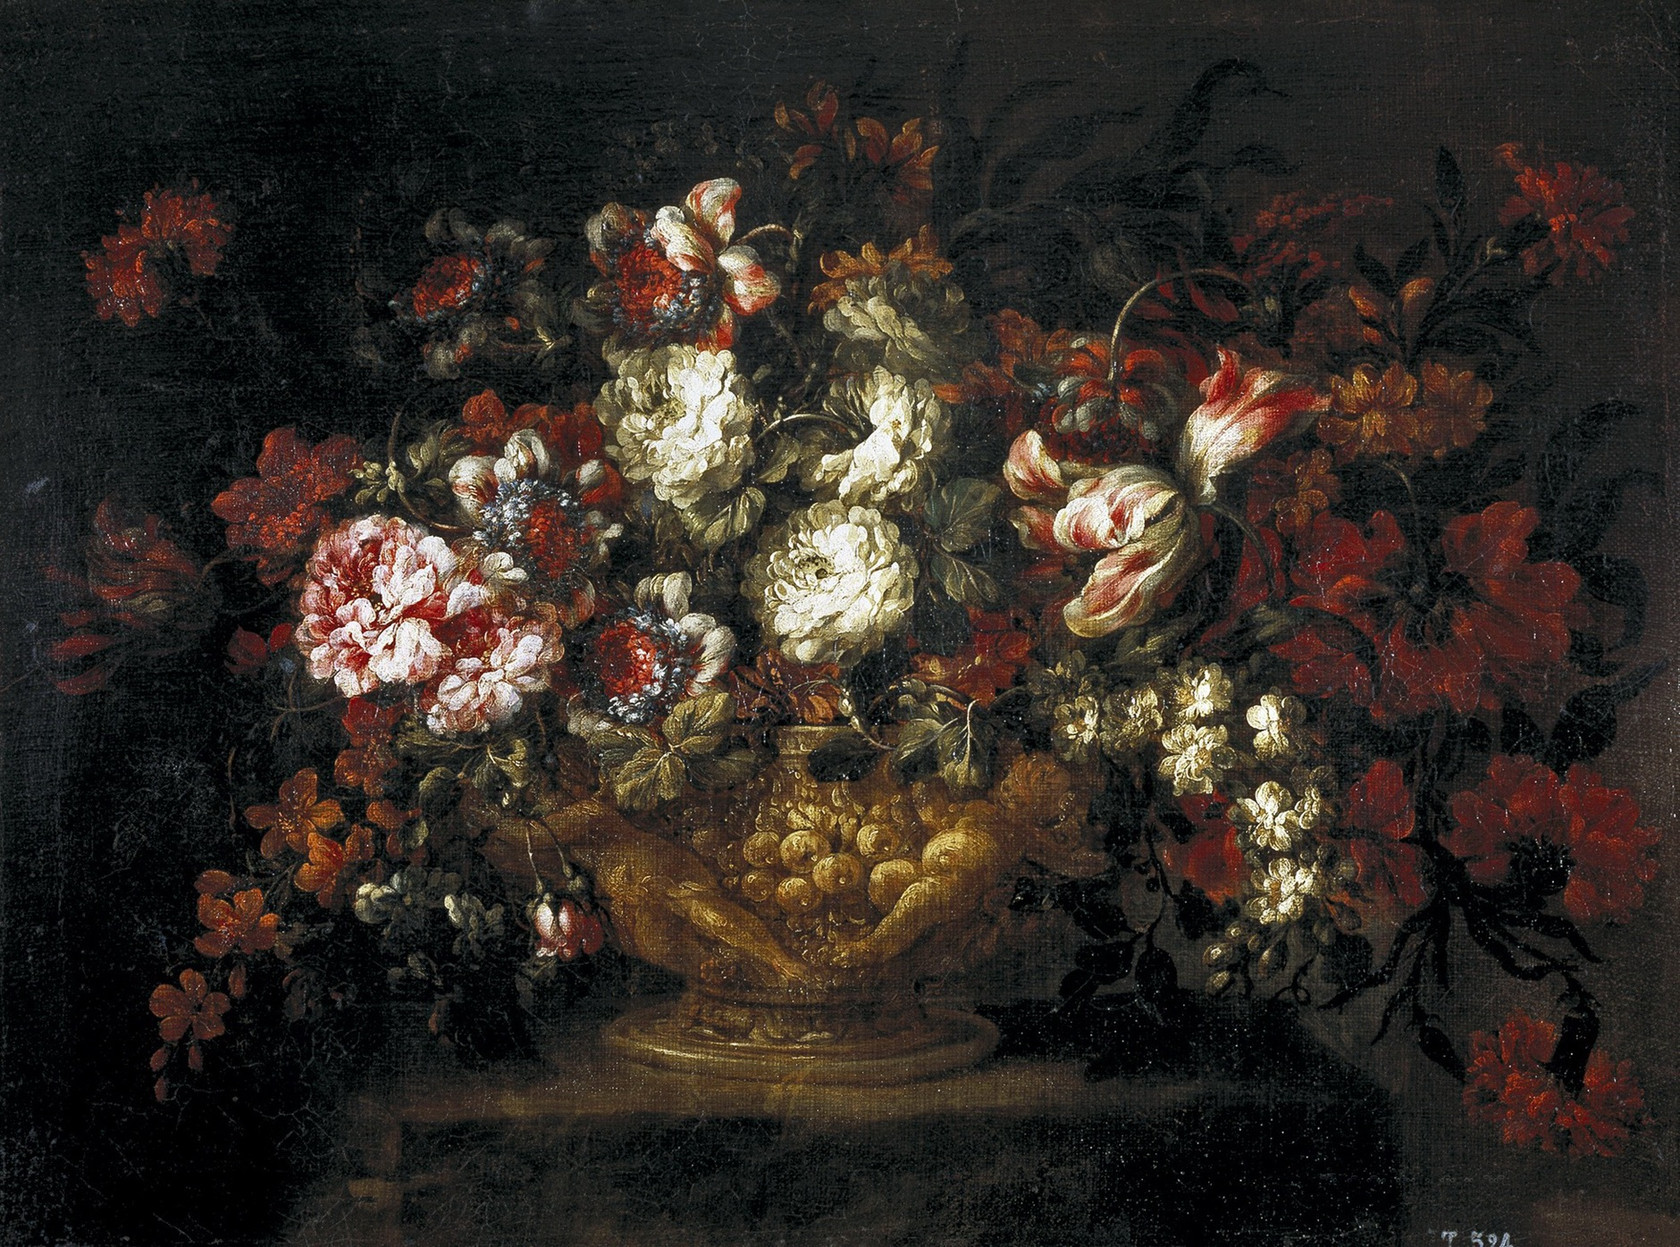 Картина №1 - Ваза с цветами, 1670 - 1680 - Музей Прадо